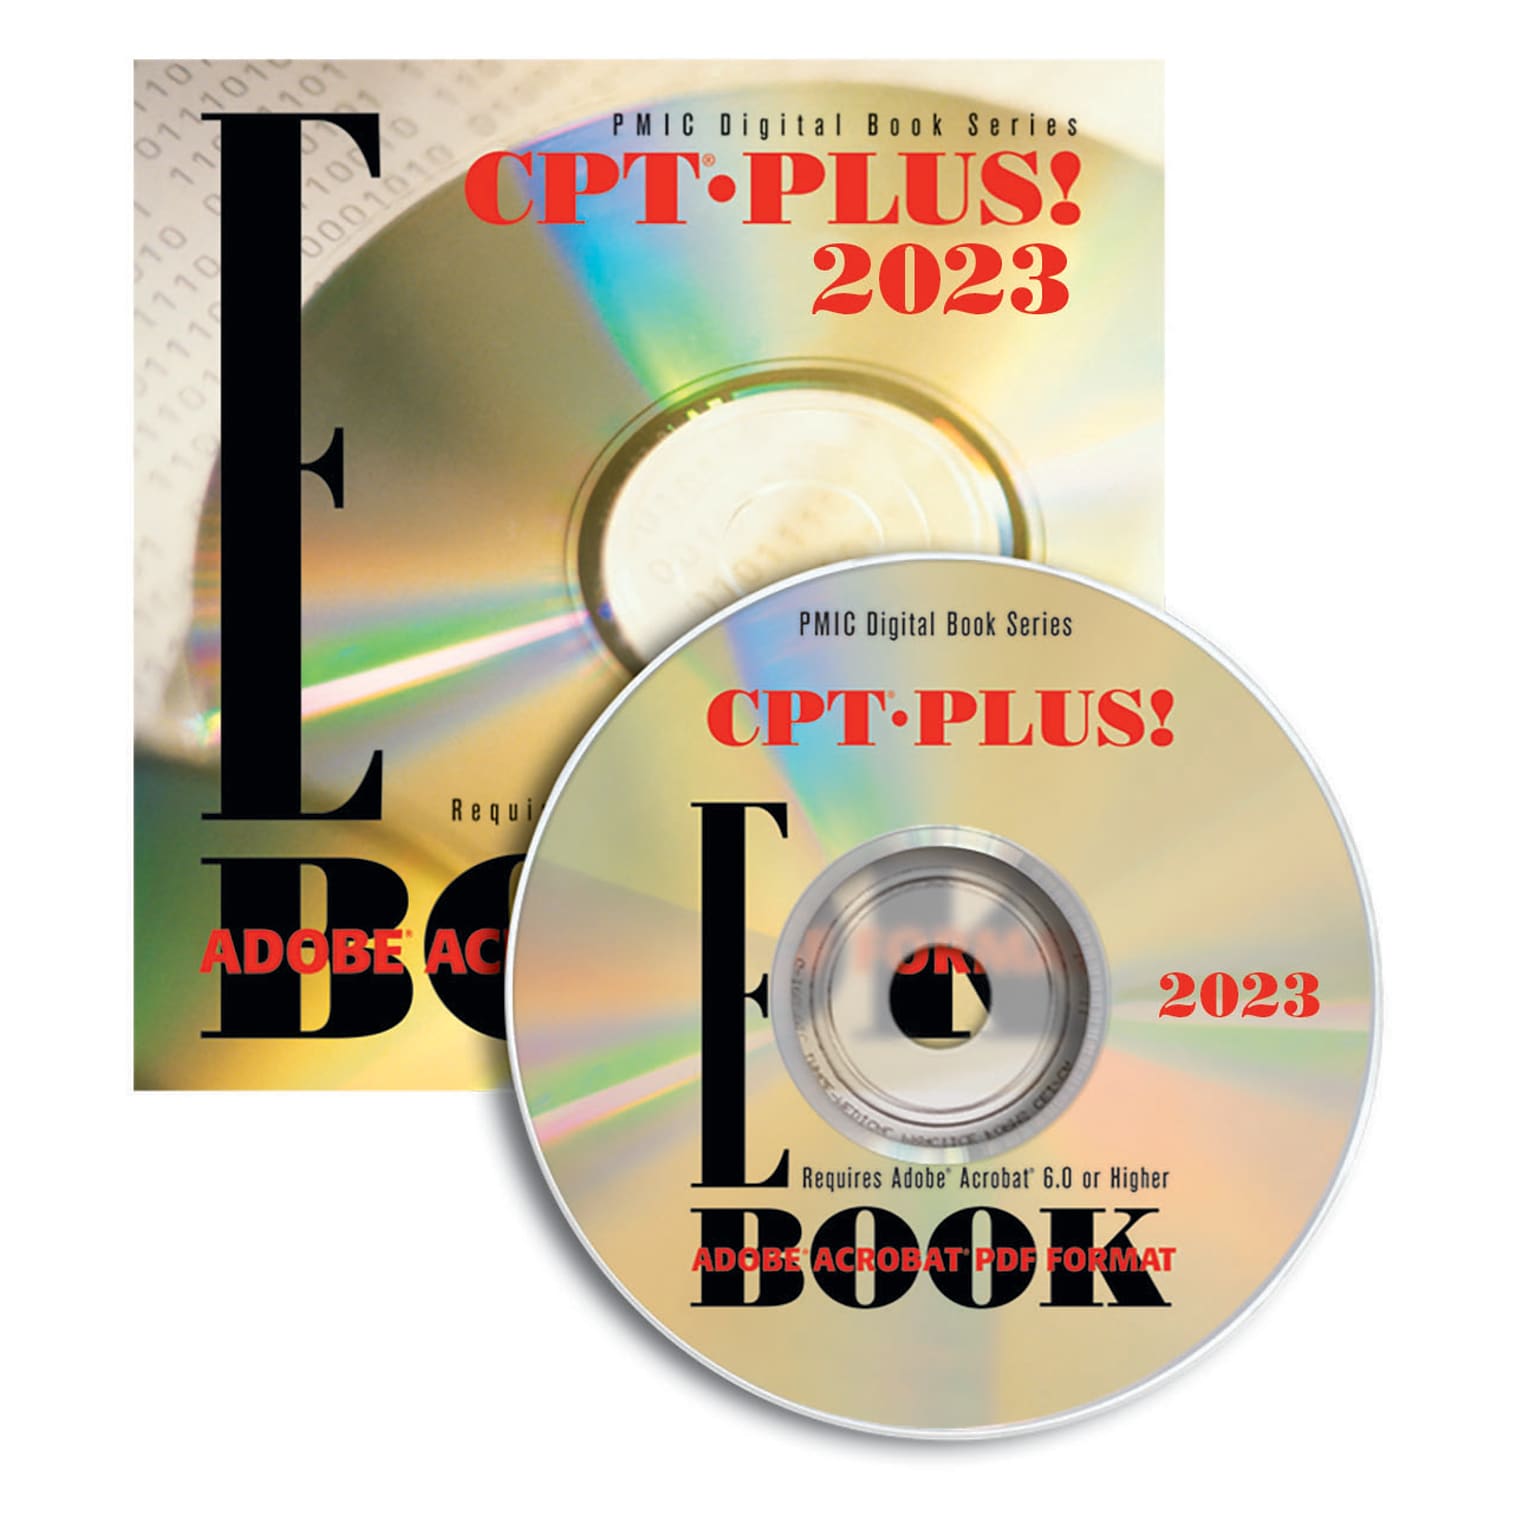 PMIC CPT Plus! 2023 E-Book CD (22304)